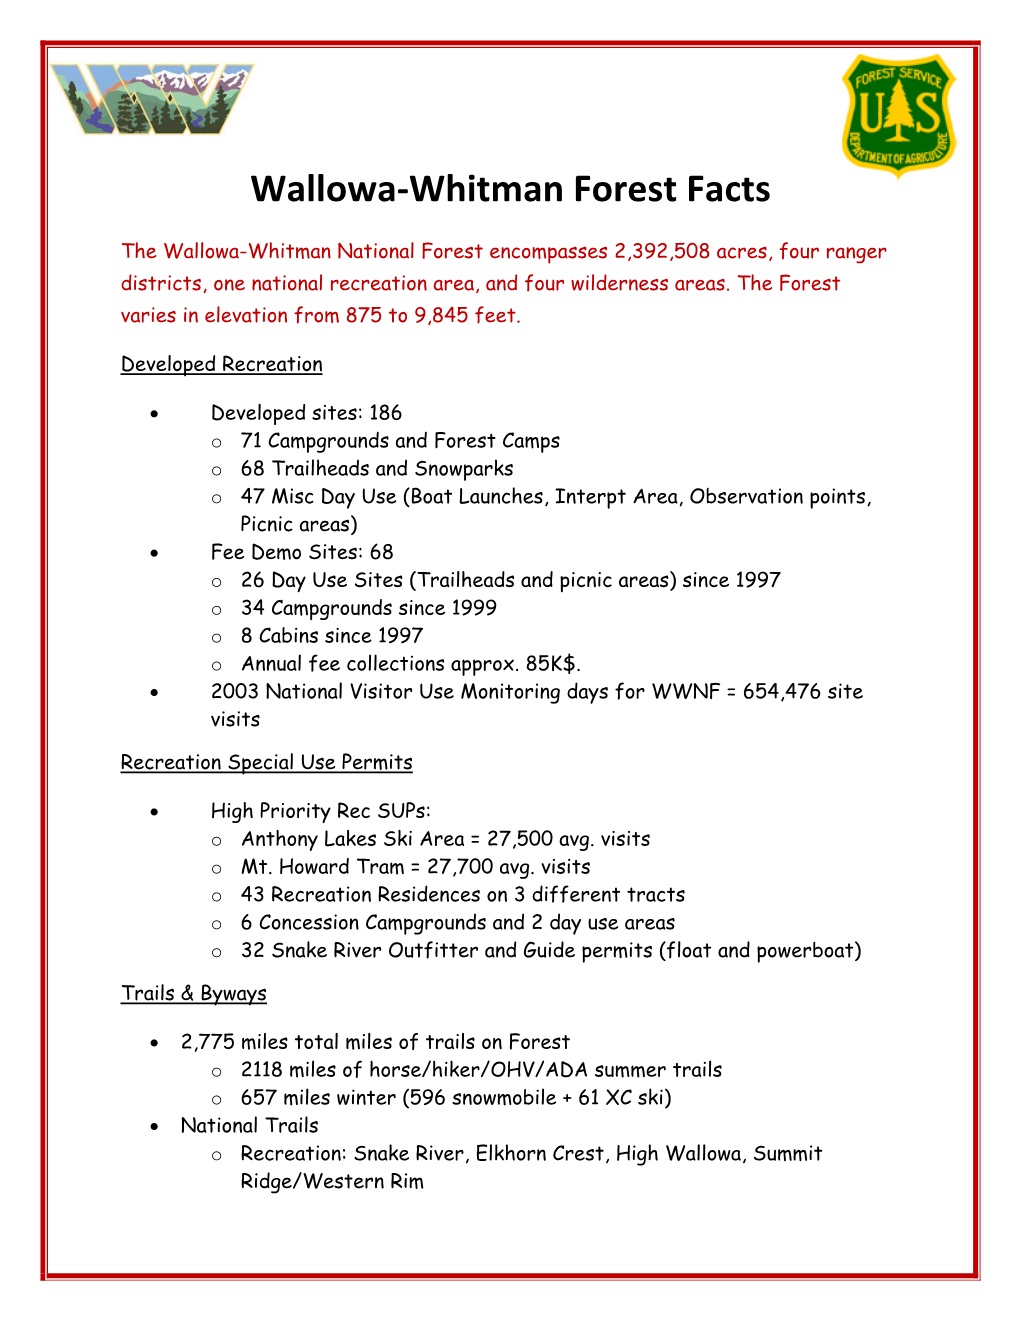 Wallowa-Whitman National Forest Facts